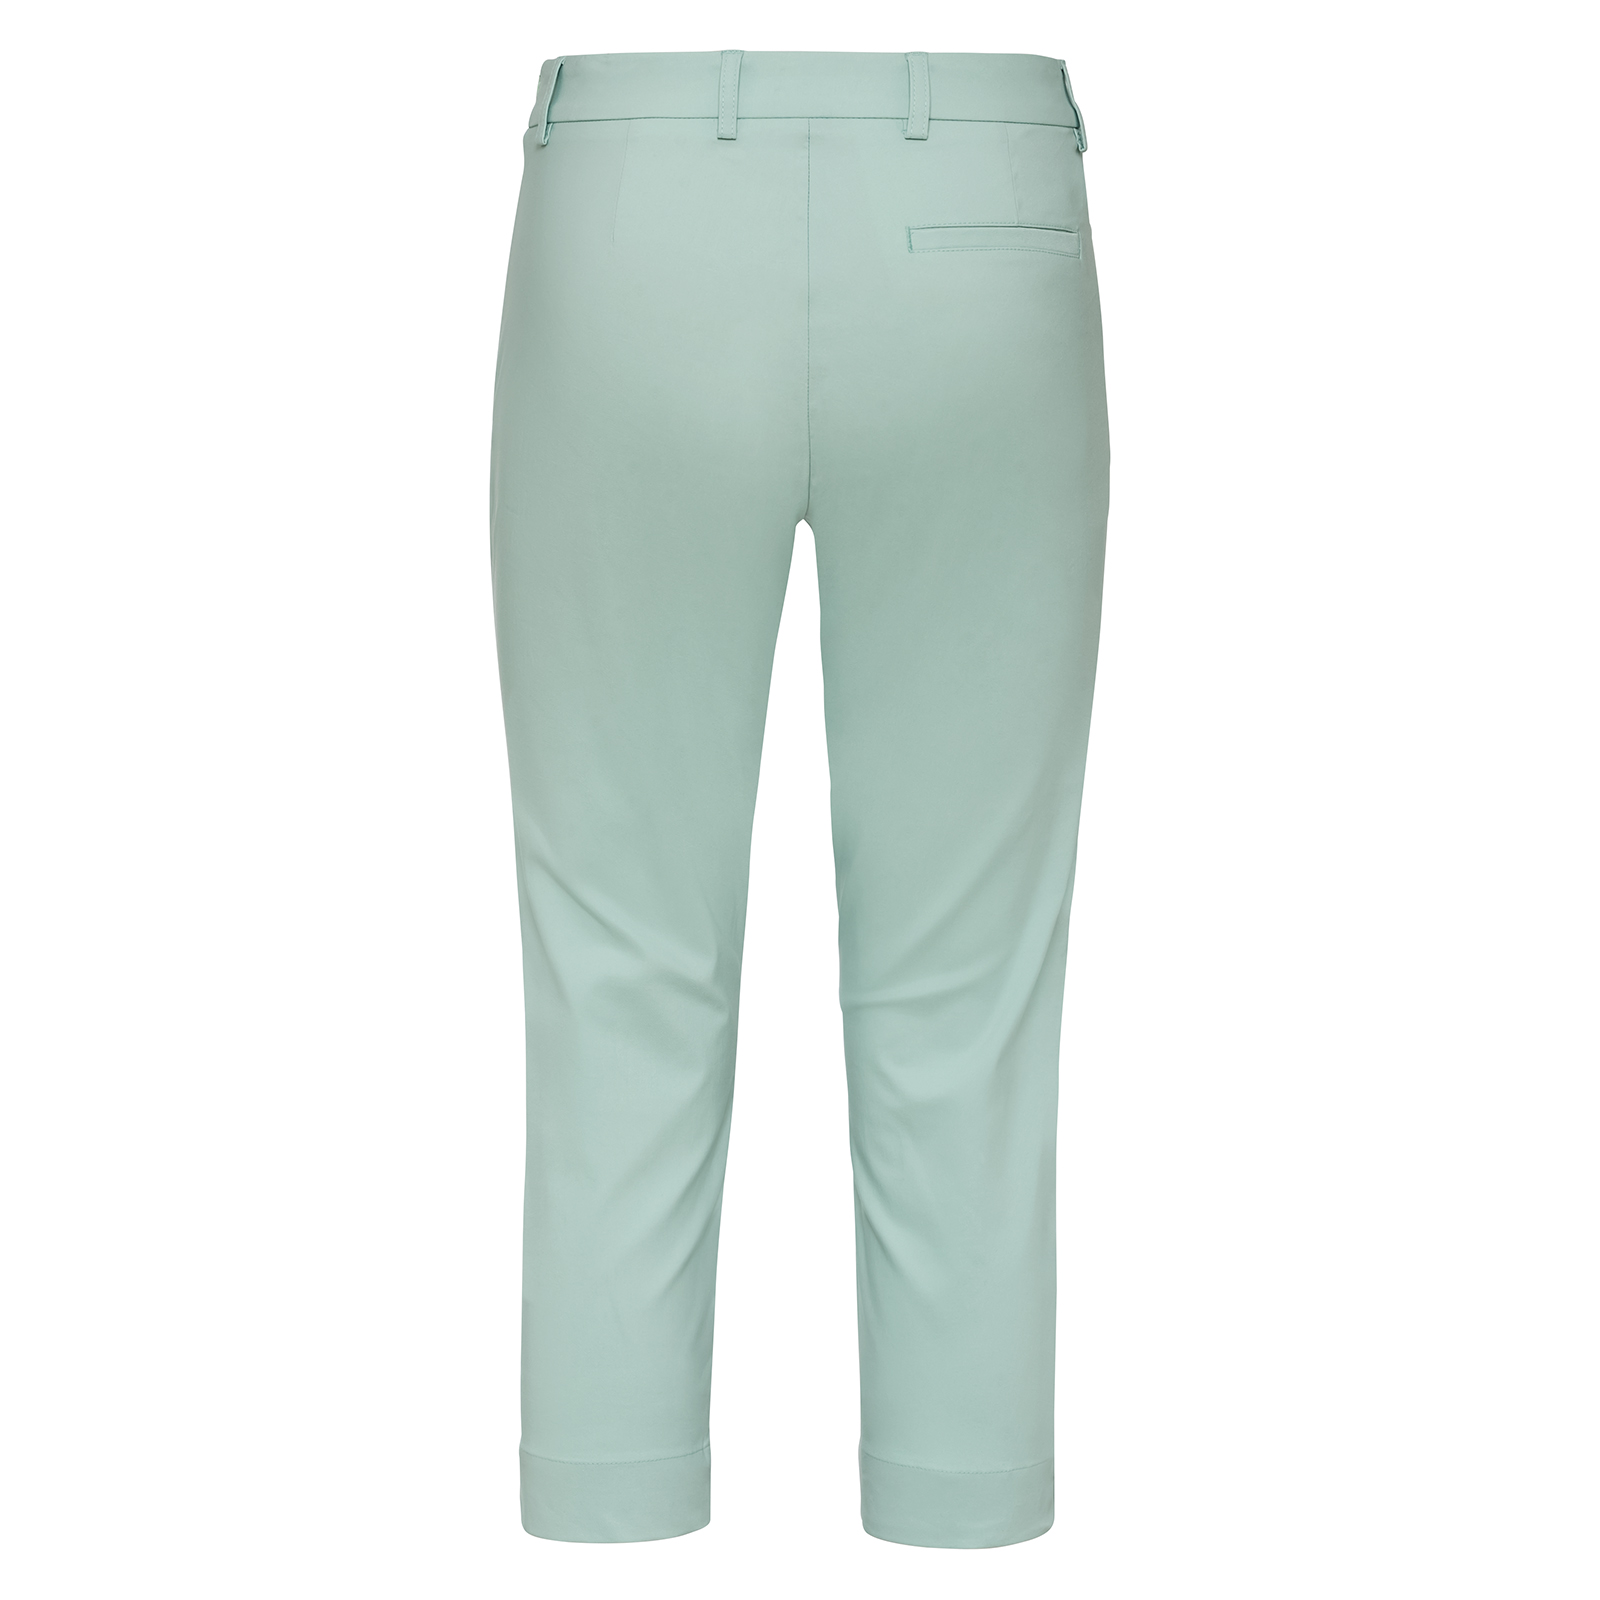 Ladies' stretch capri-style trousers